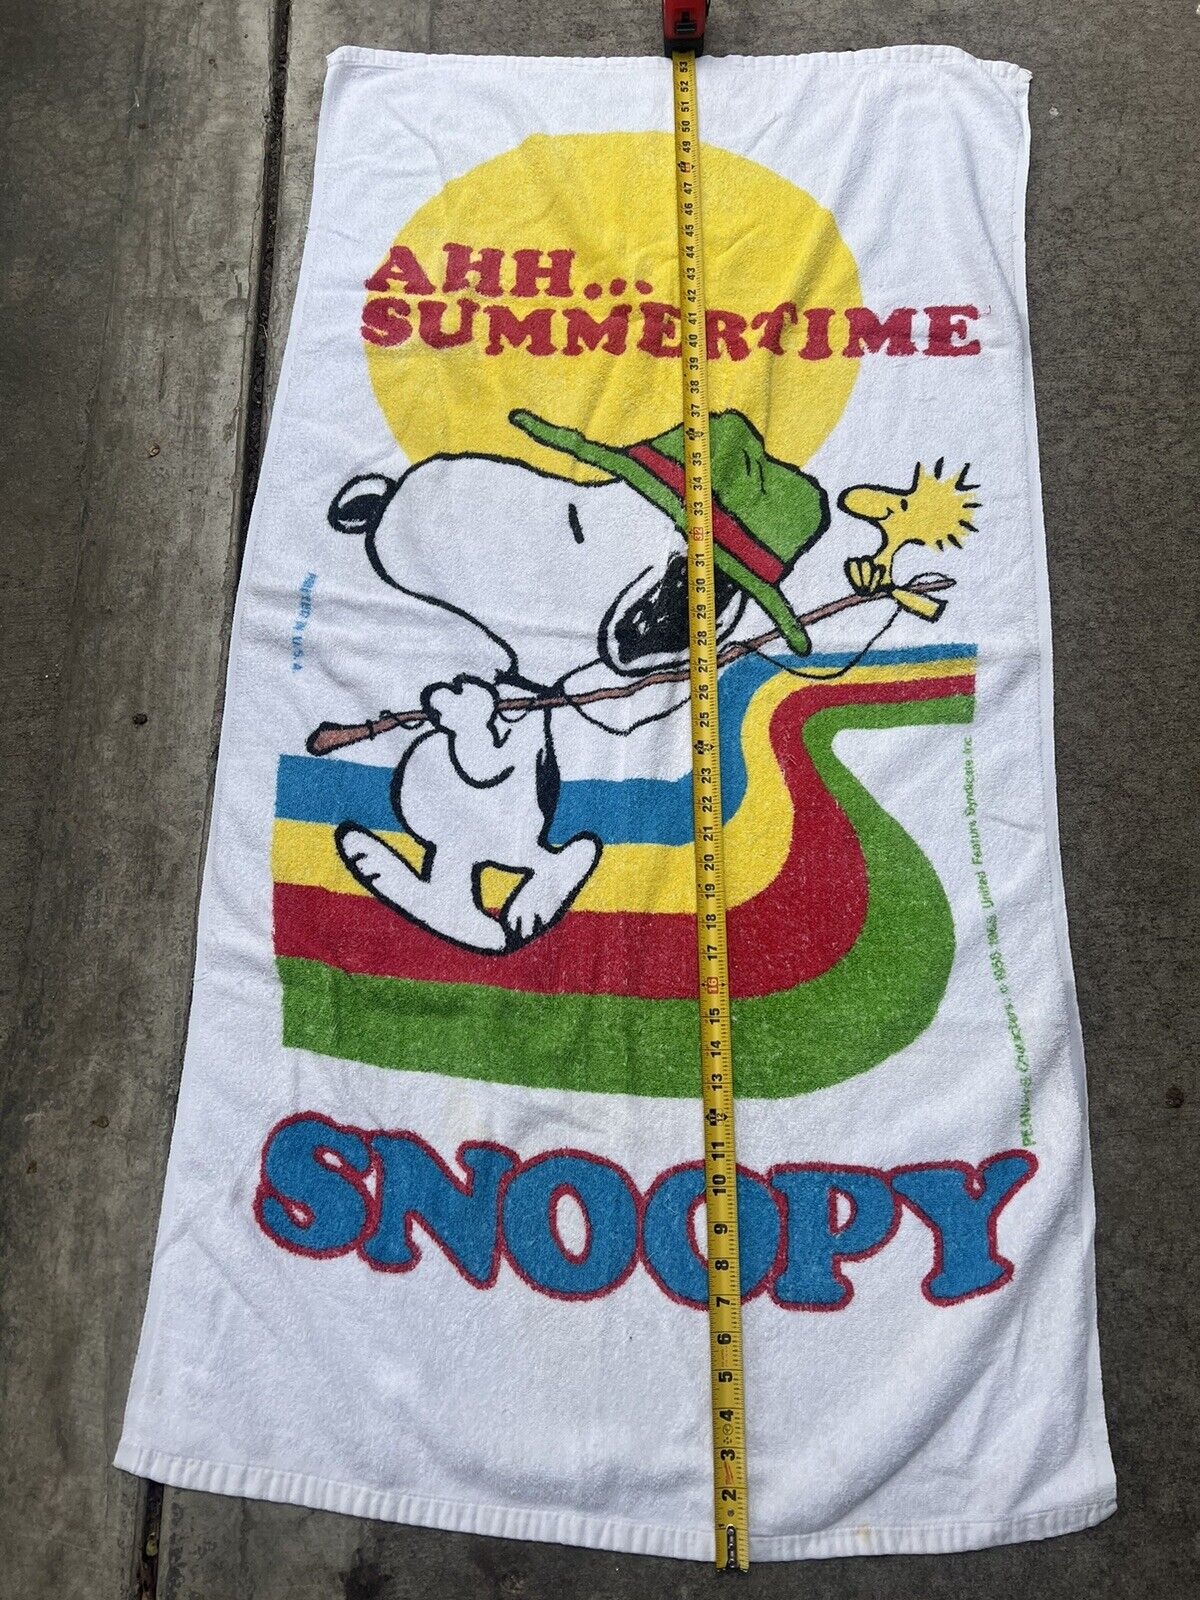 Snoopy Fishing Beach Towel VTG 1985 Jay Franco Pictorial Peanuts 31 x 51 in